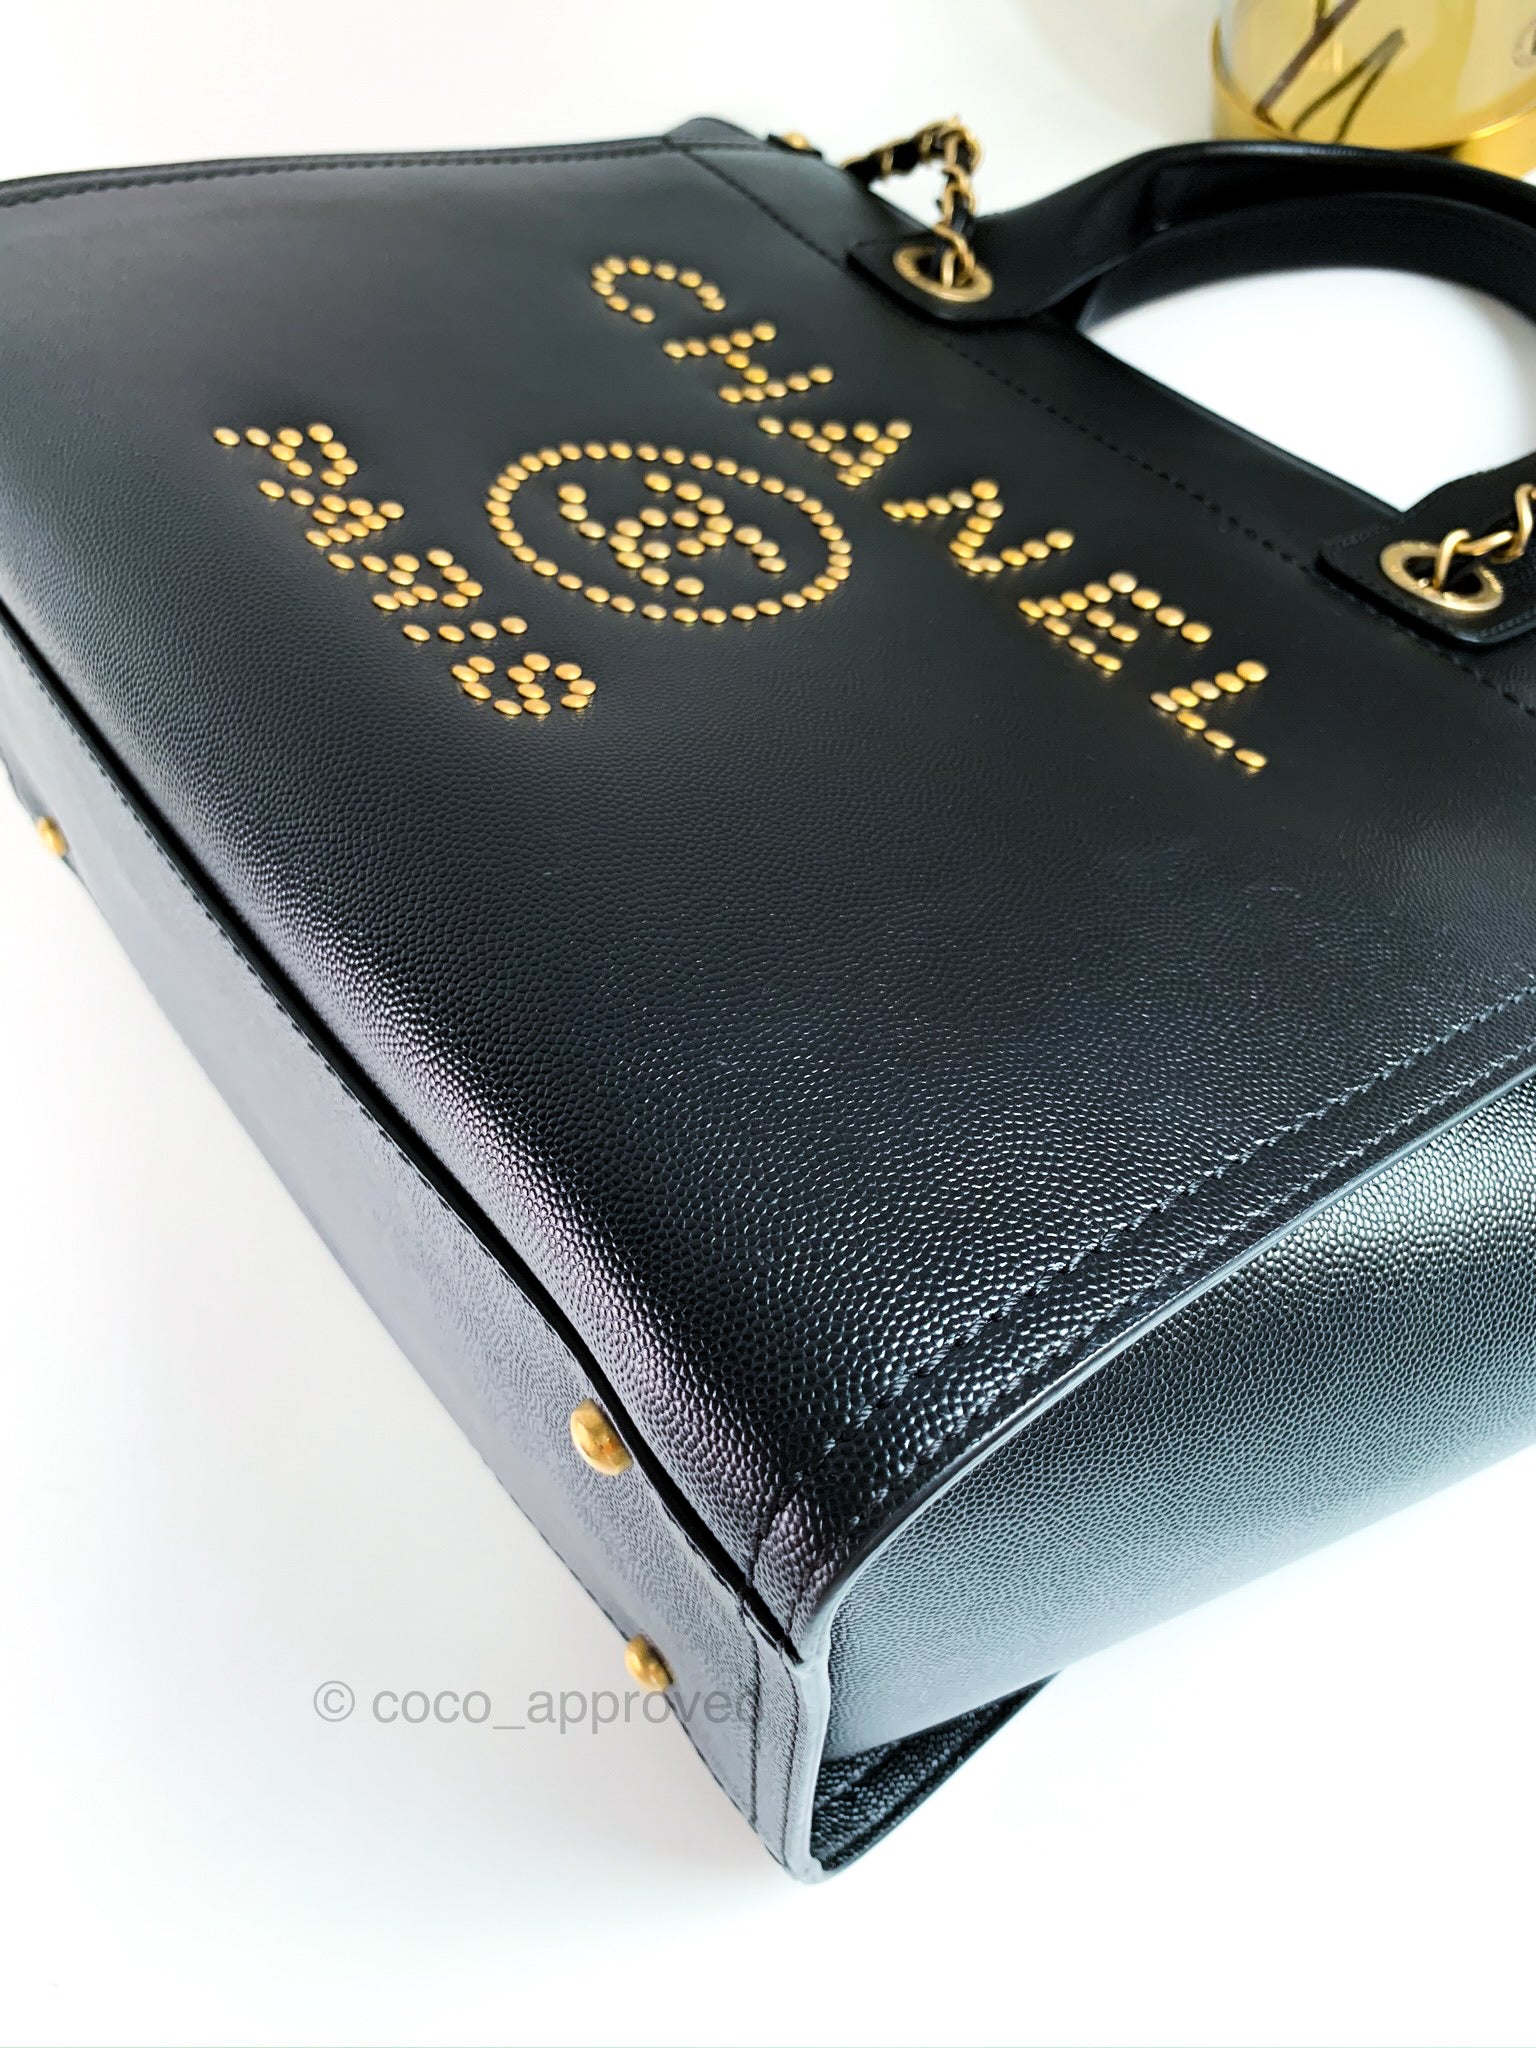 Chanel Small Studded Deauville Tote Black Caviar Gold Hardware – Coco  Approved Studio